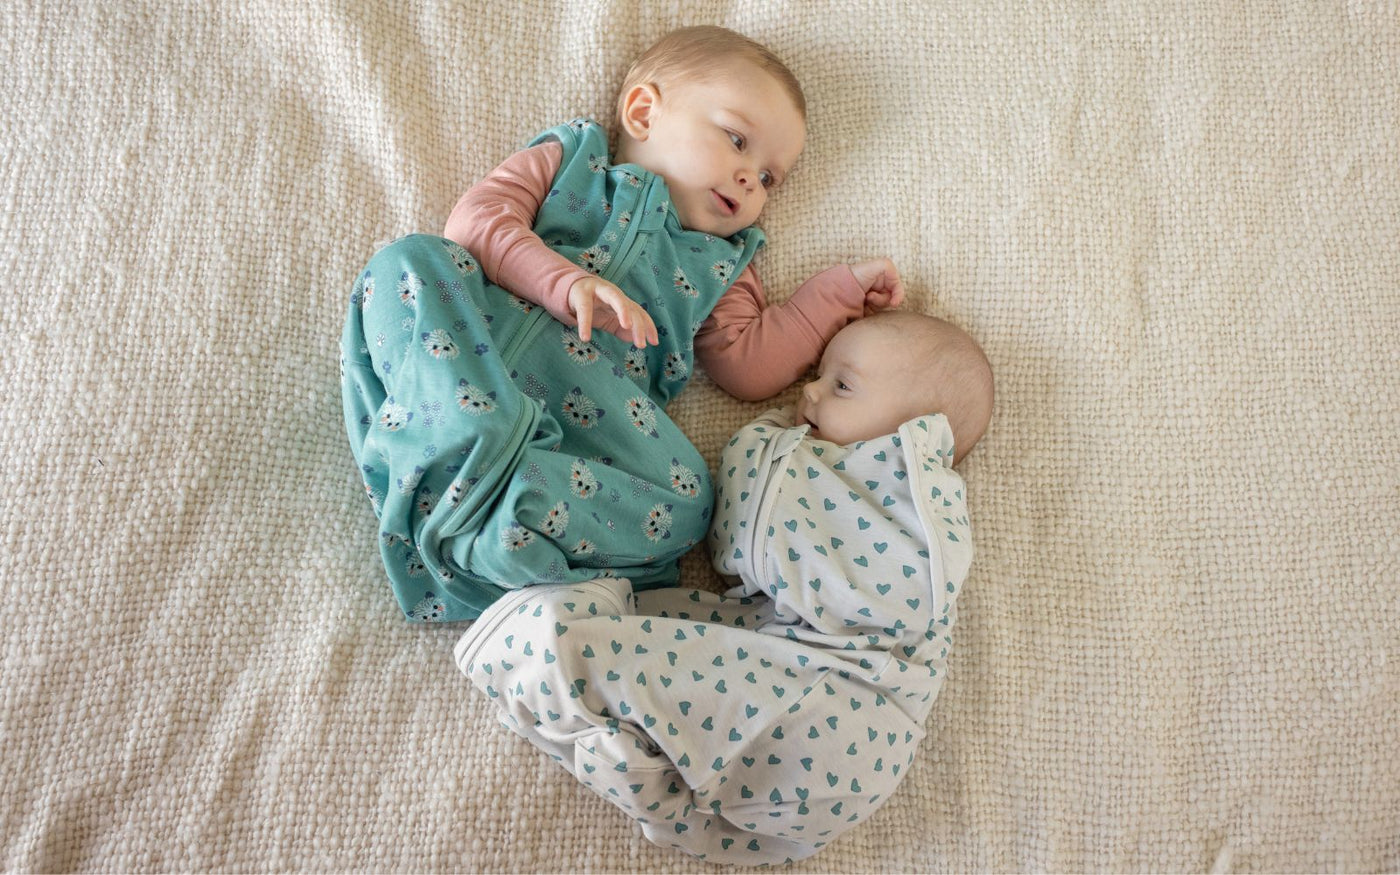 How bamboo sleeping bags helps babies sleep better